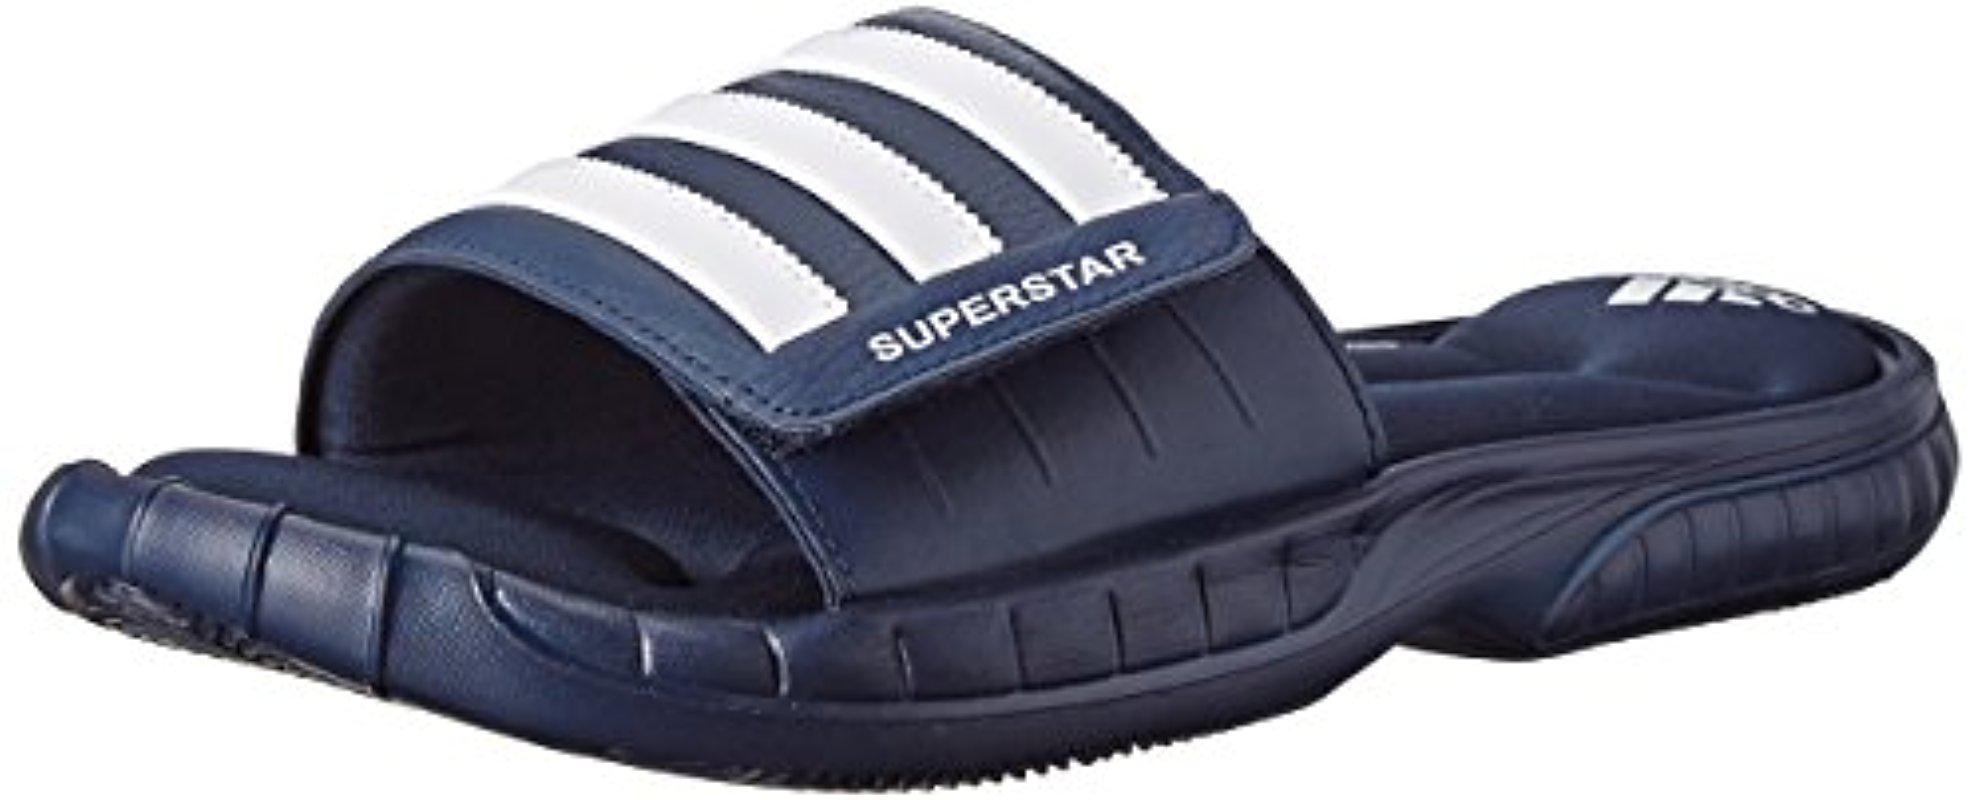 adidas men's superstar slide sandal